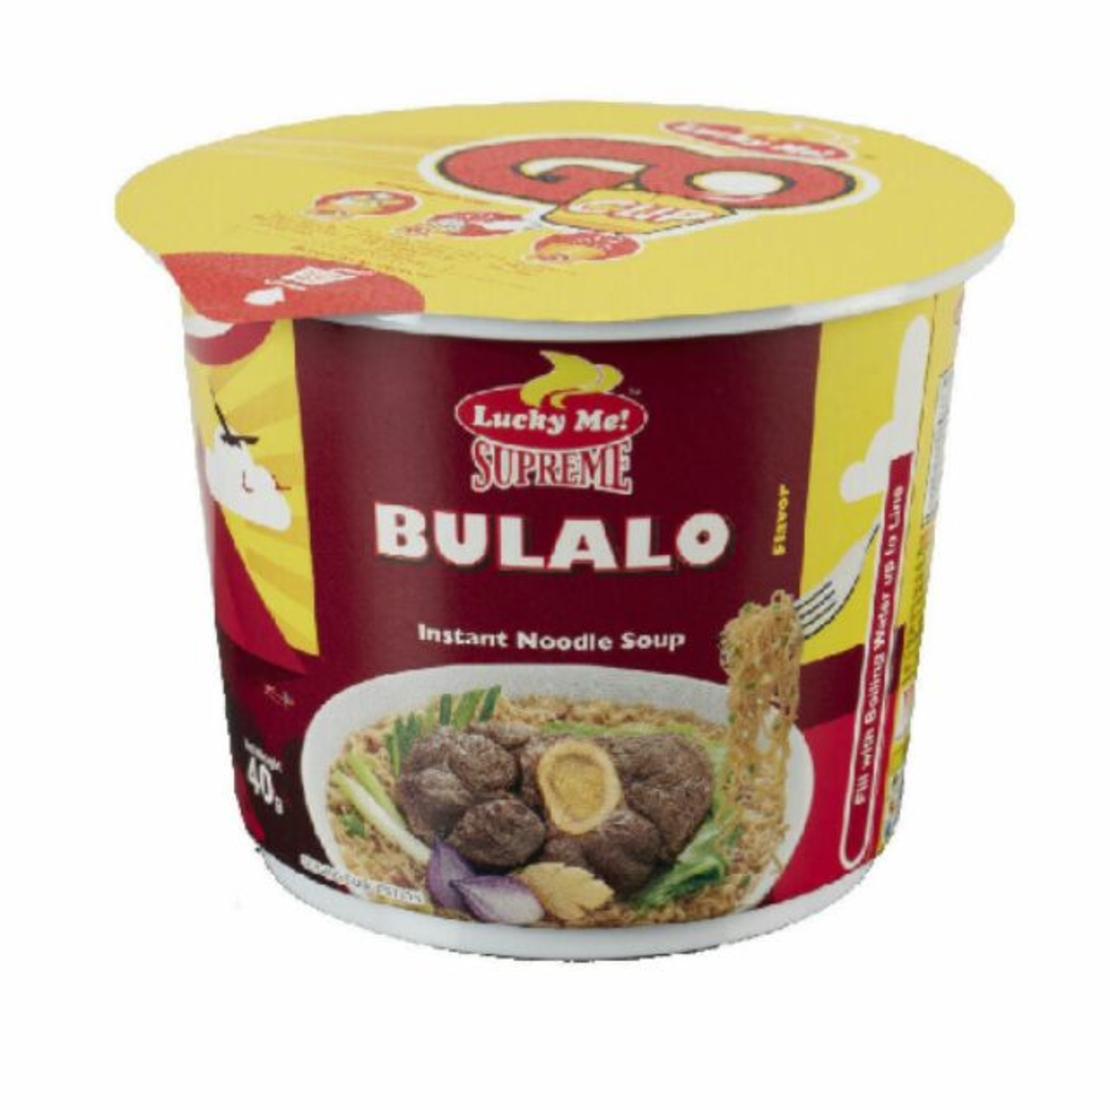 Lucky me - Bulalo - instant noodle soup